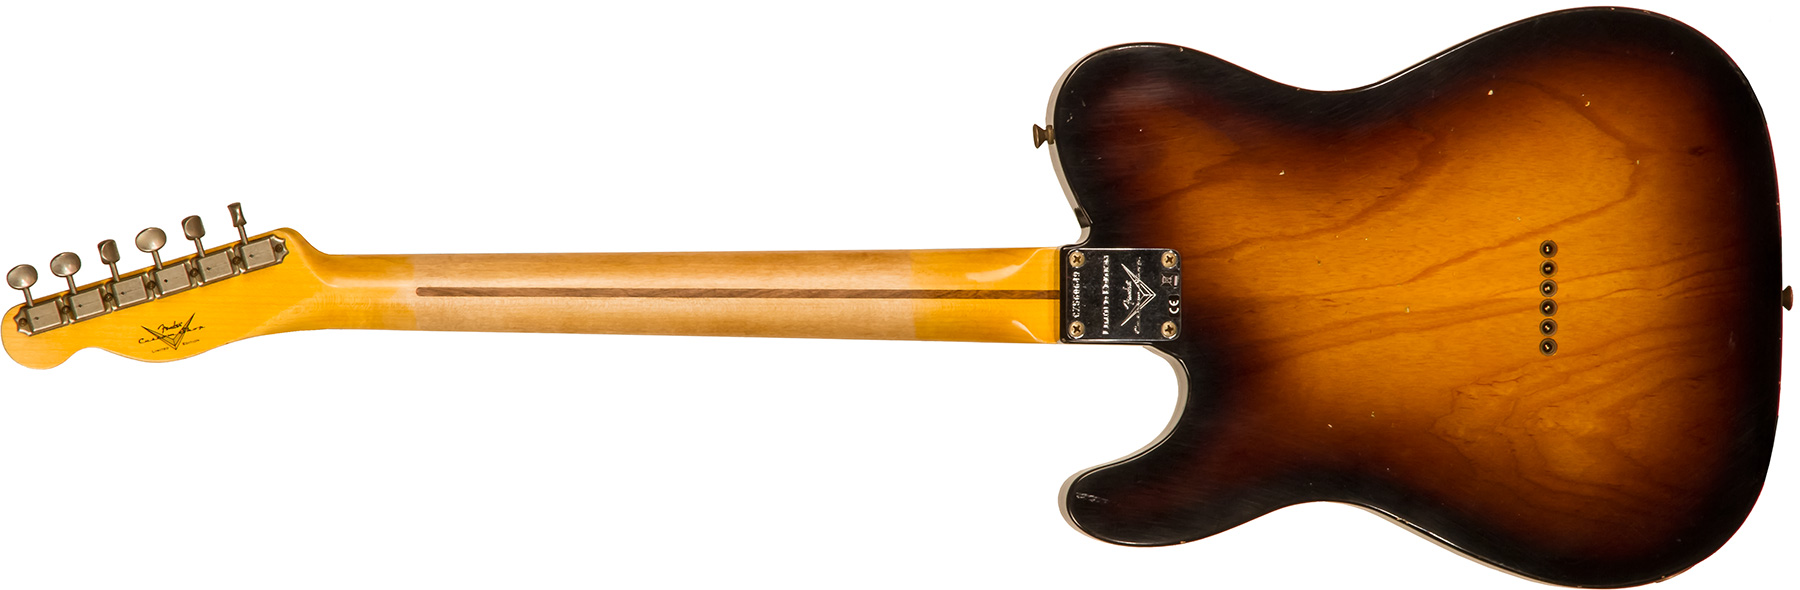 Fender Custom Shop Tele 1955 Ltd 2s Ht Mn #cz560649 - Relic Wide Fade 2-color Sunburst - Televorm elektrische gitaar - Variation 1